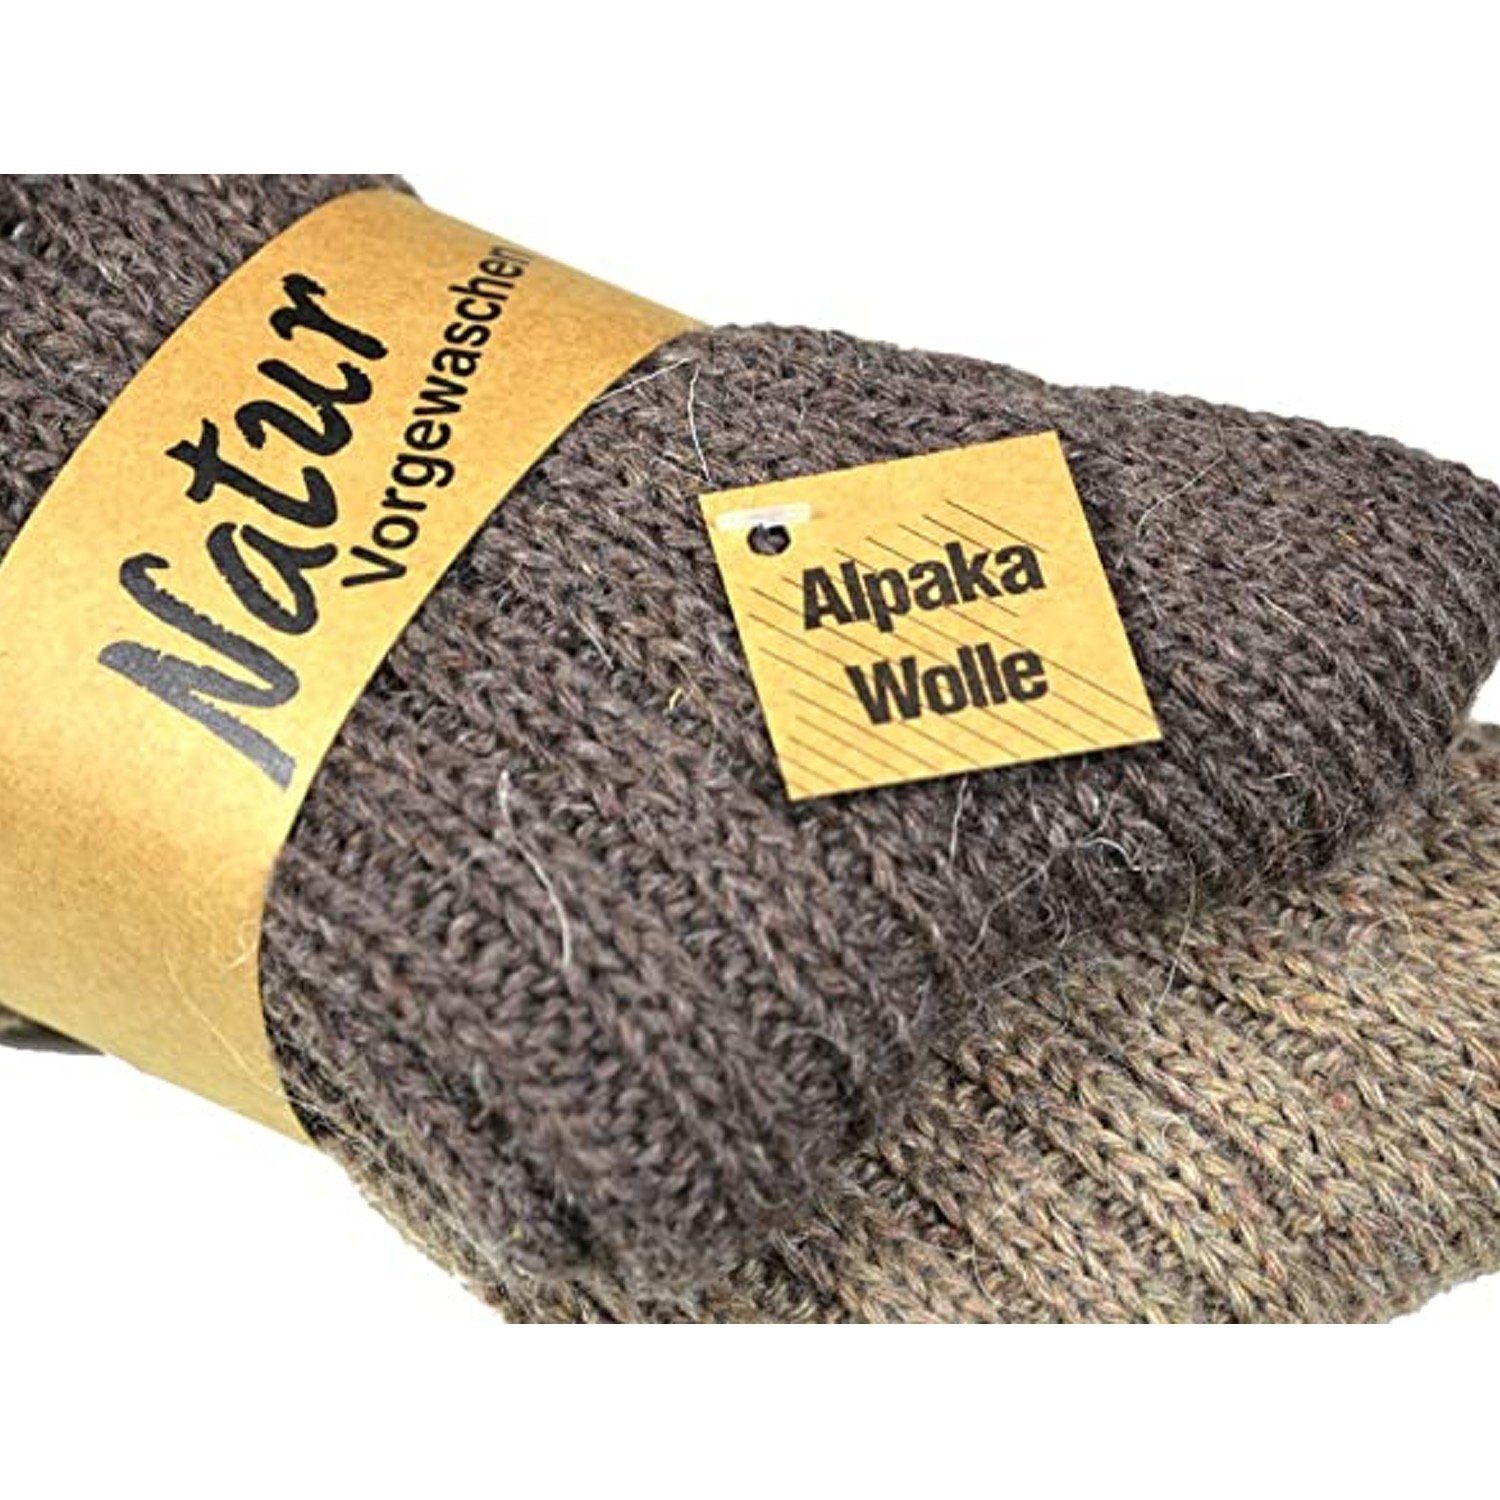 Socken Stricksocken (2-Paar) Wollsocken wie braun Cocain selbst Alpaka Socken underwear gestrickt